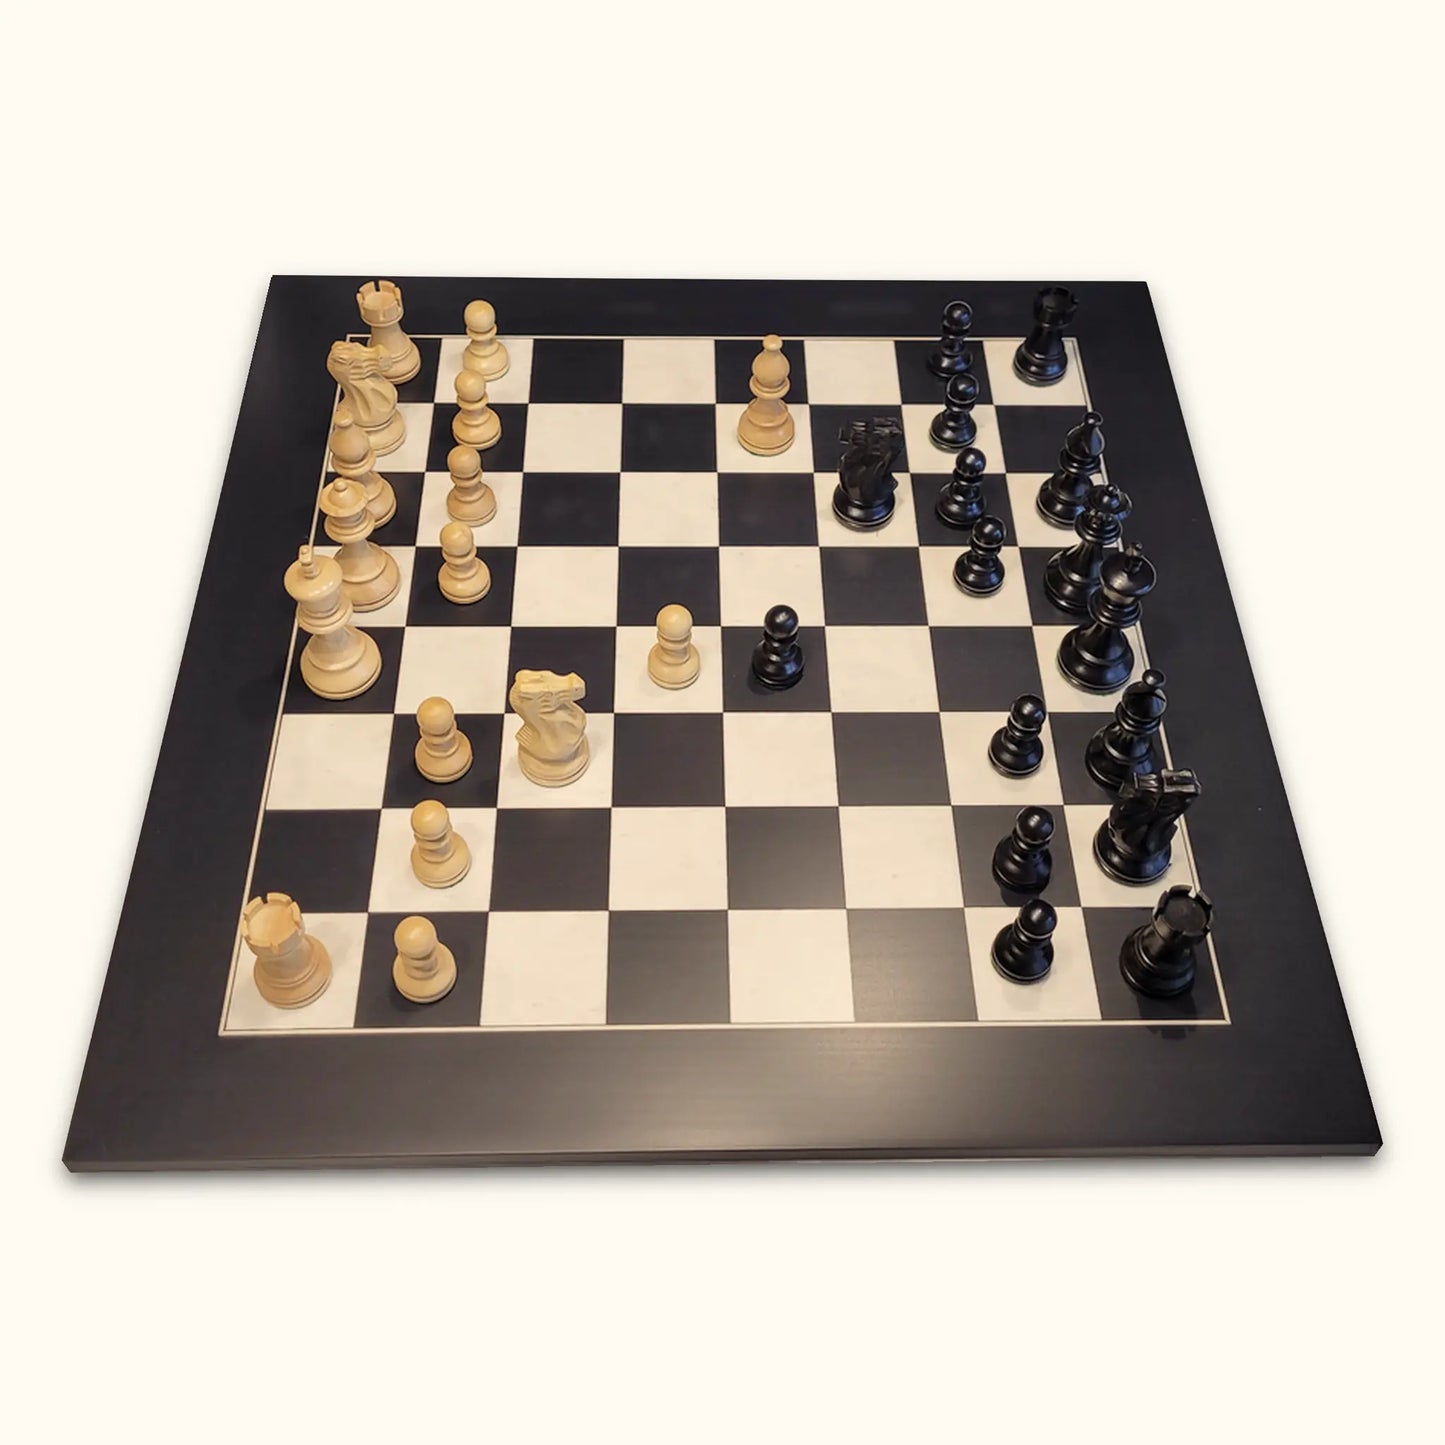 Chess pieces American Staunton ebonized on black deluxe chessboard side